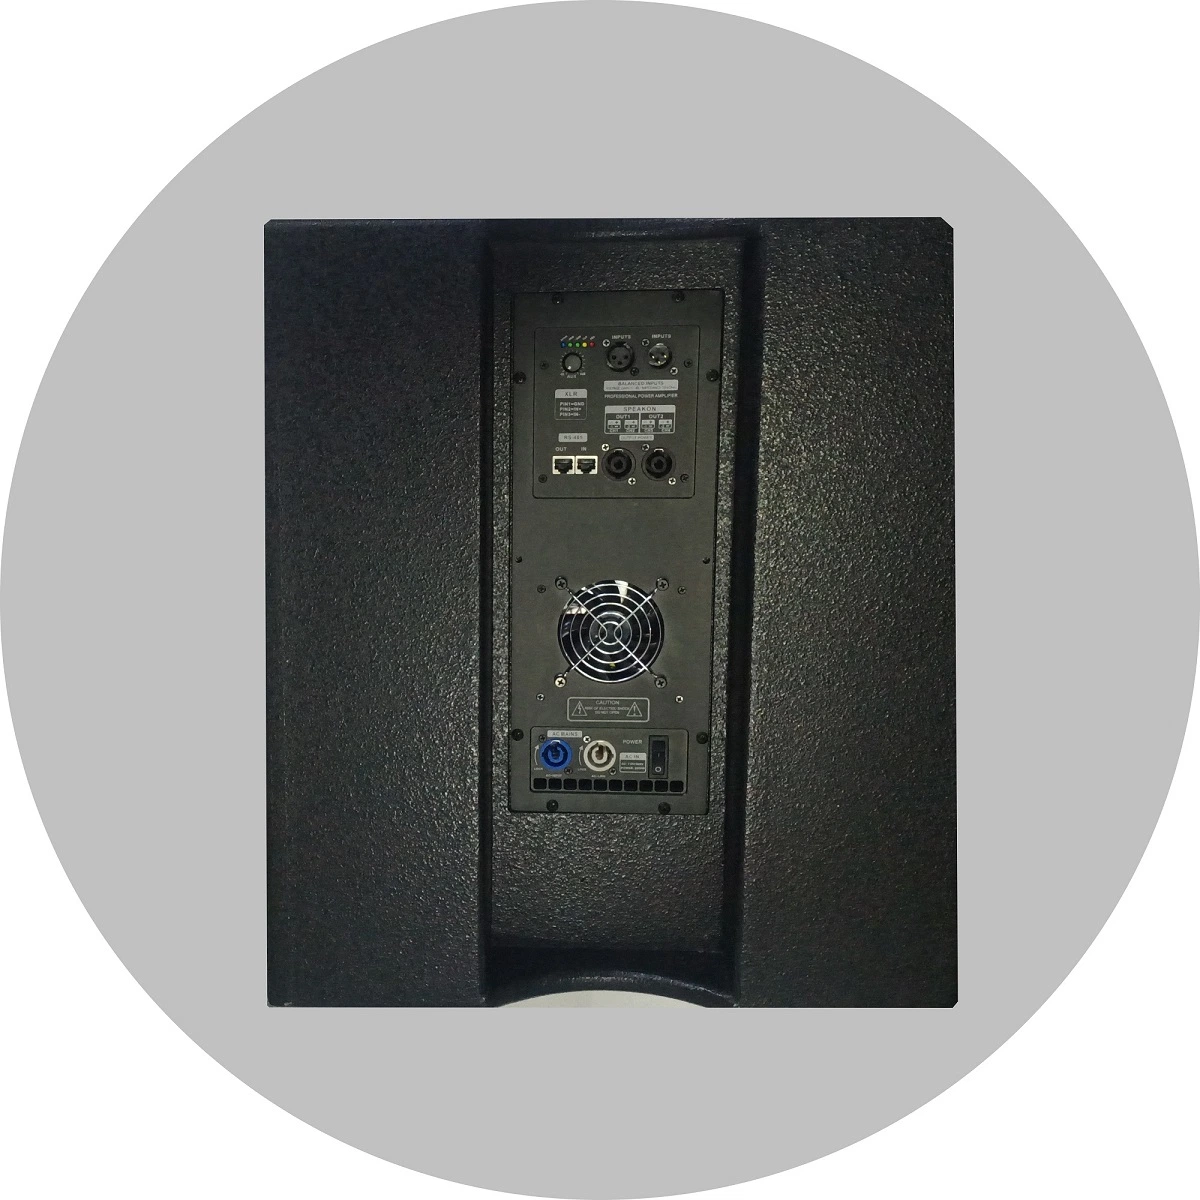 Audiopeak 1500W Dw2 600 Class D Plate Amplifier for Subwoofer